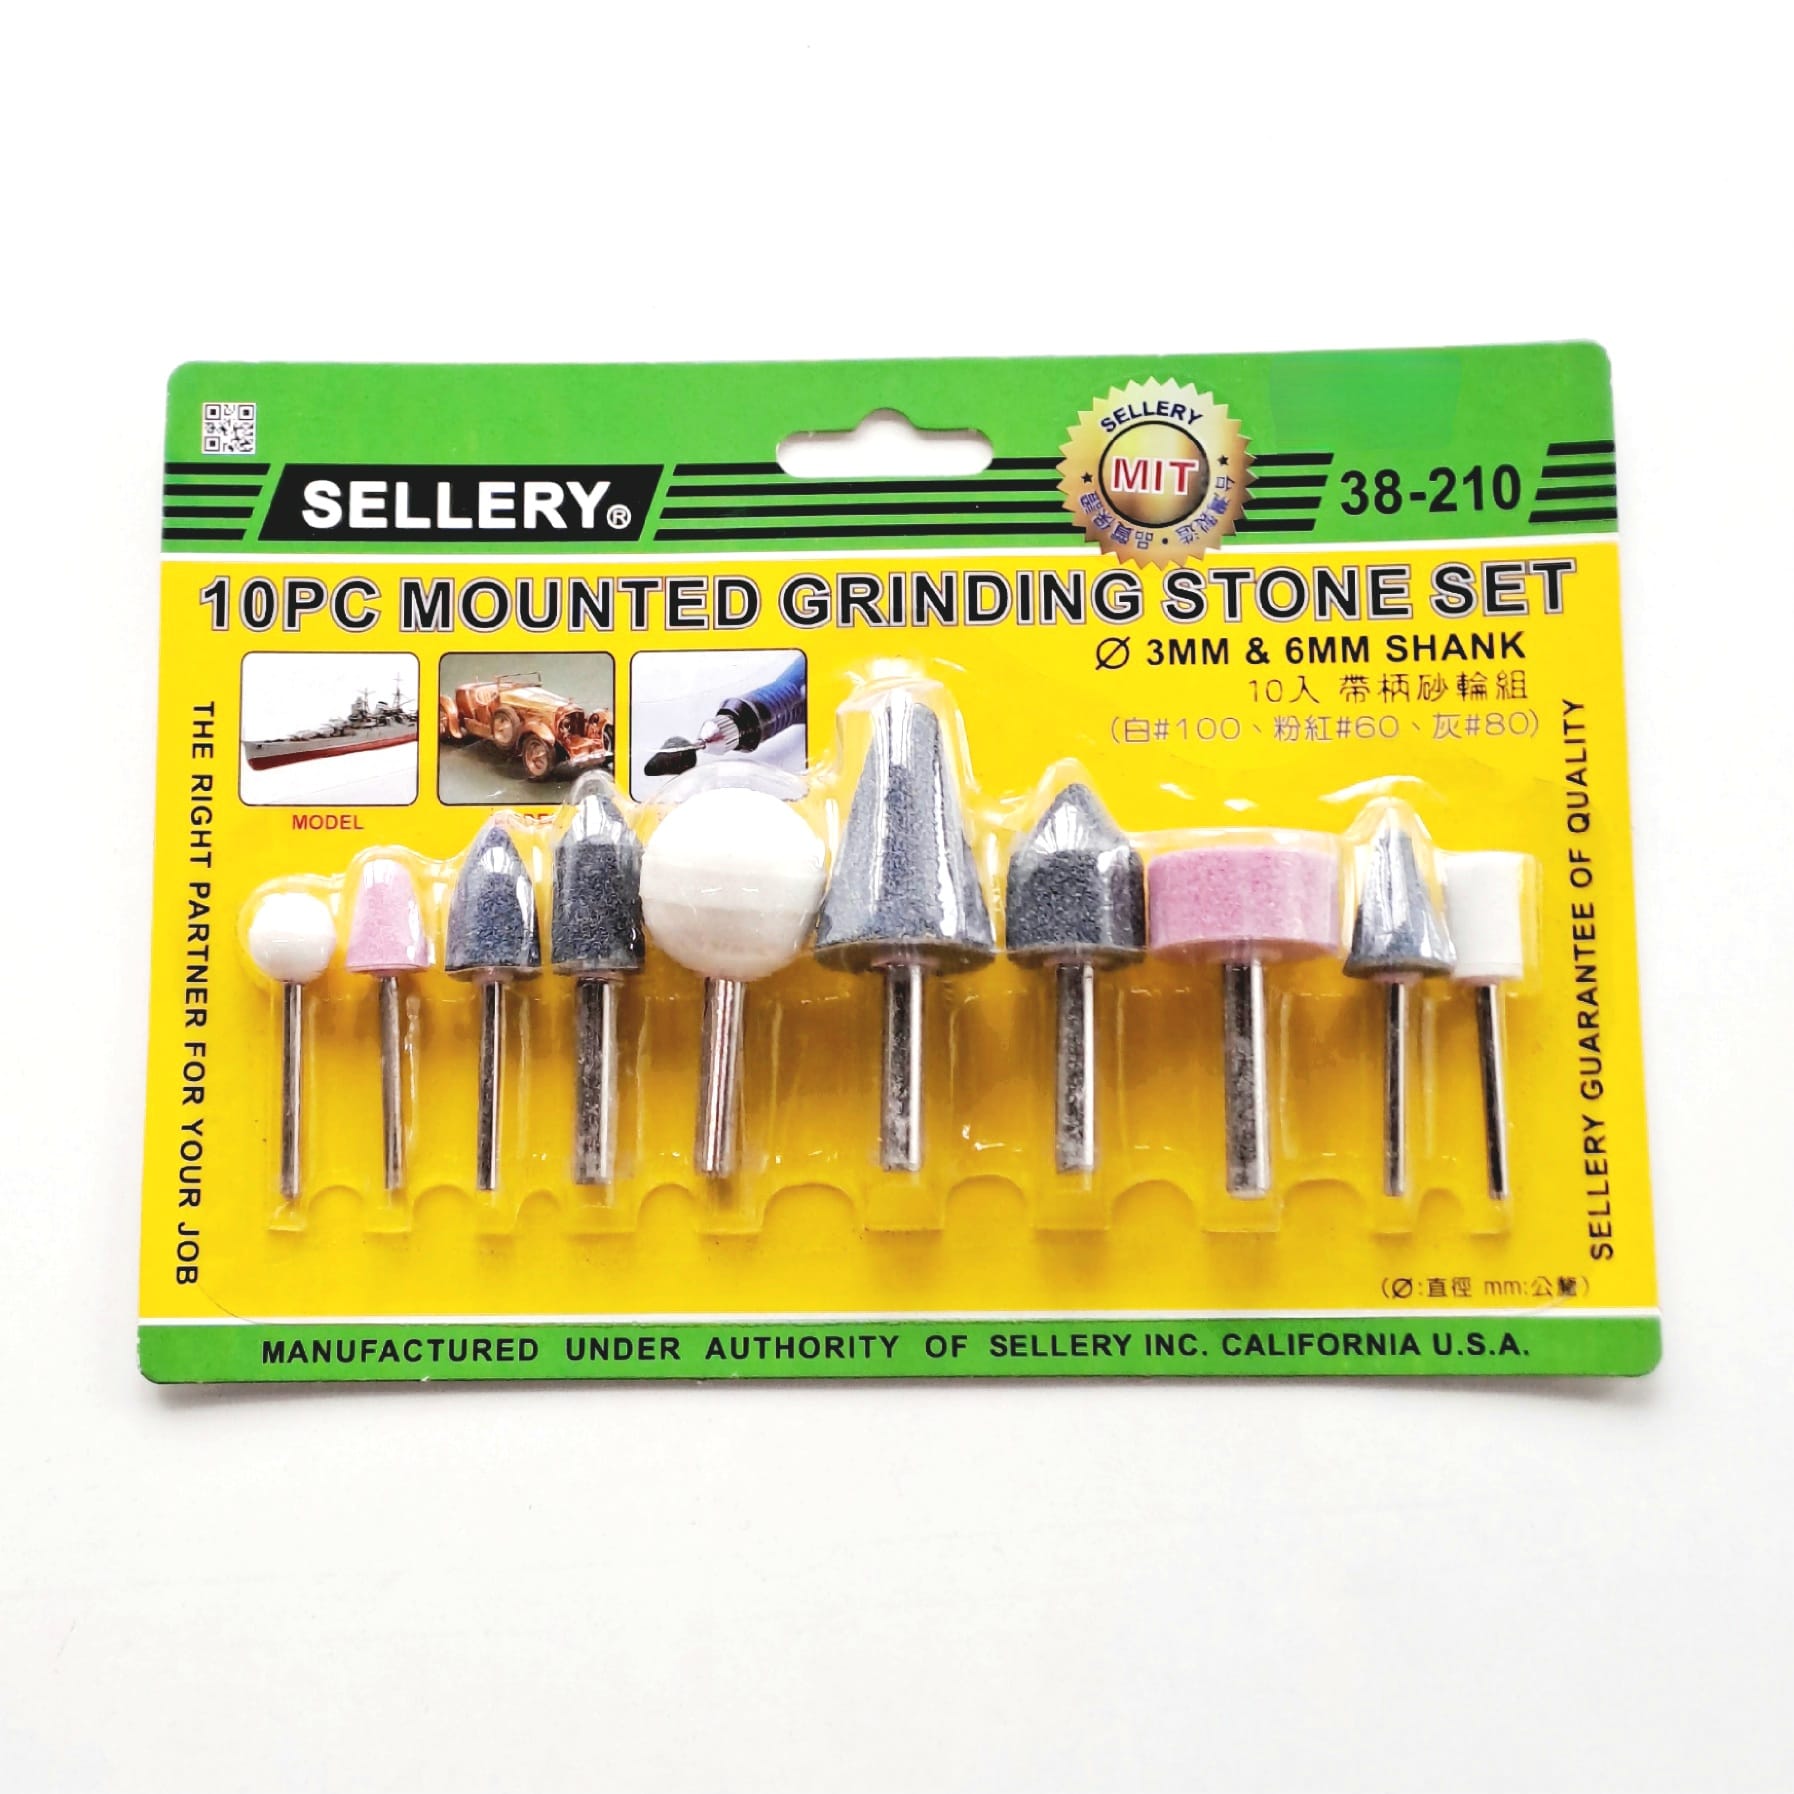 Sellery 38-210 10pc Mounted Grinding Stone Set - 3mm & 6mm Diameter Shank 14.4 x 20.2 x 2.7